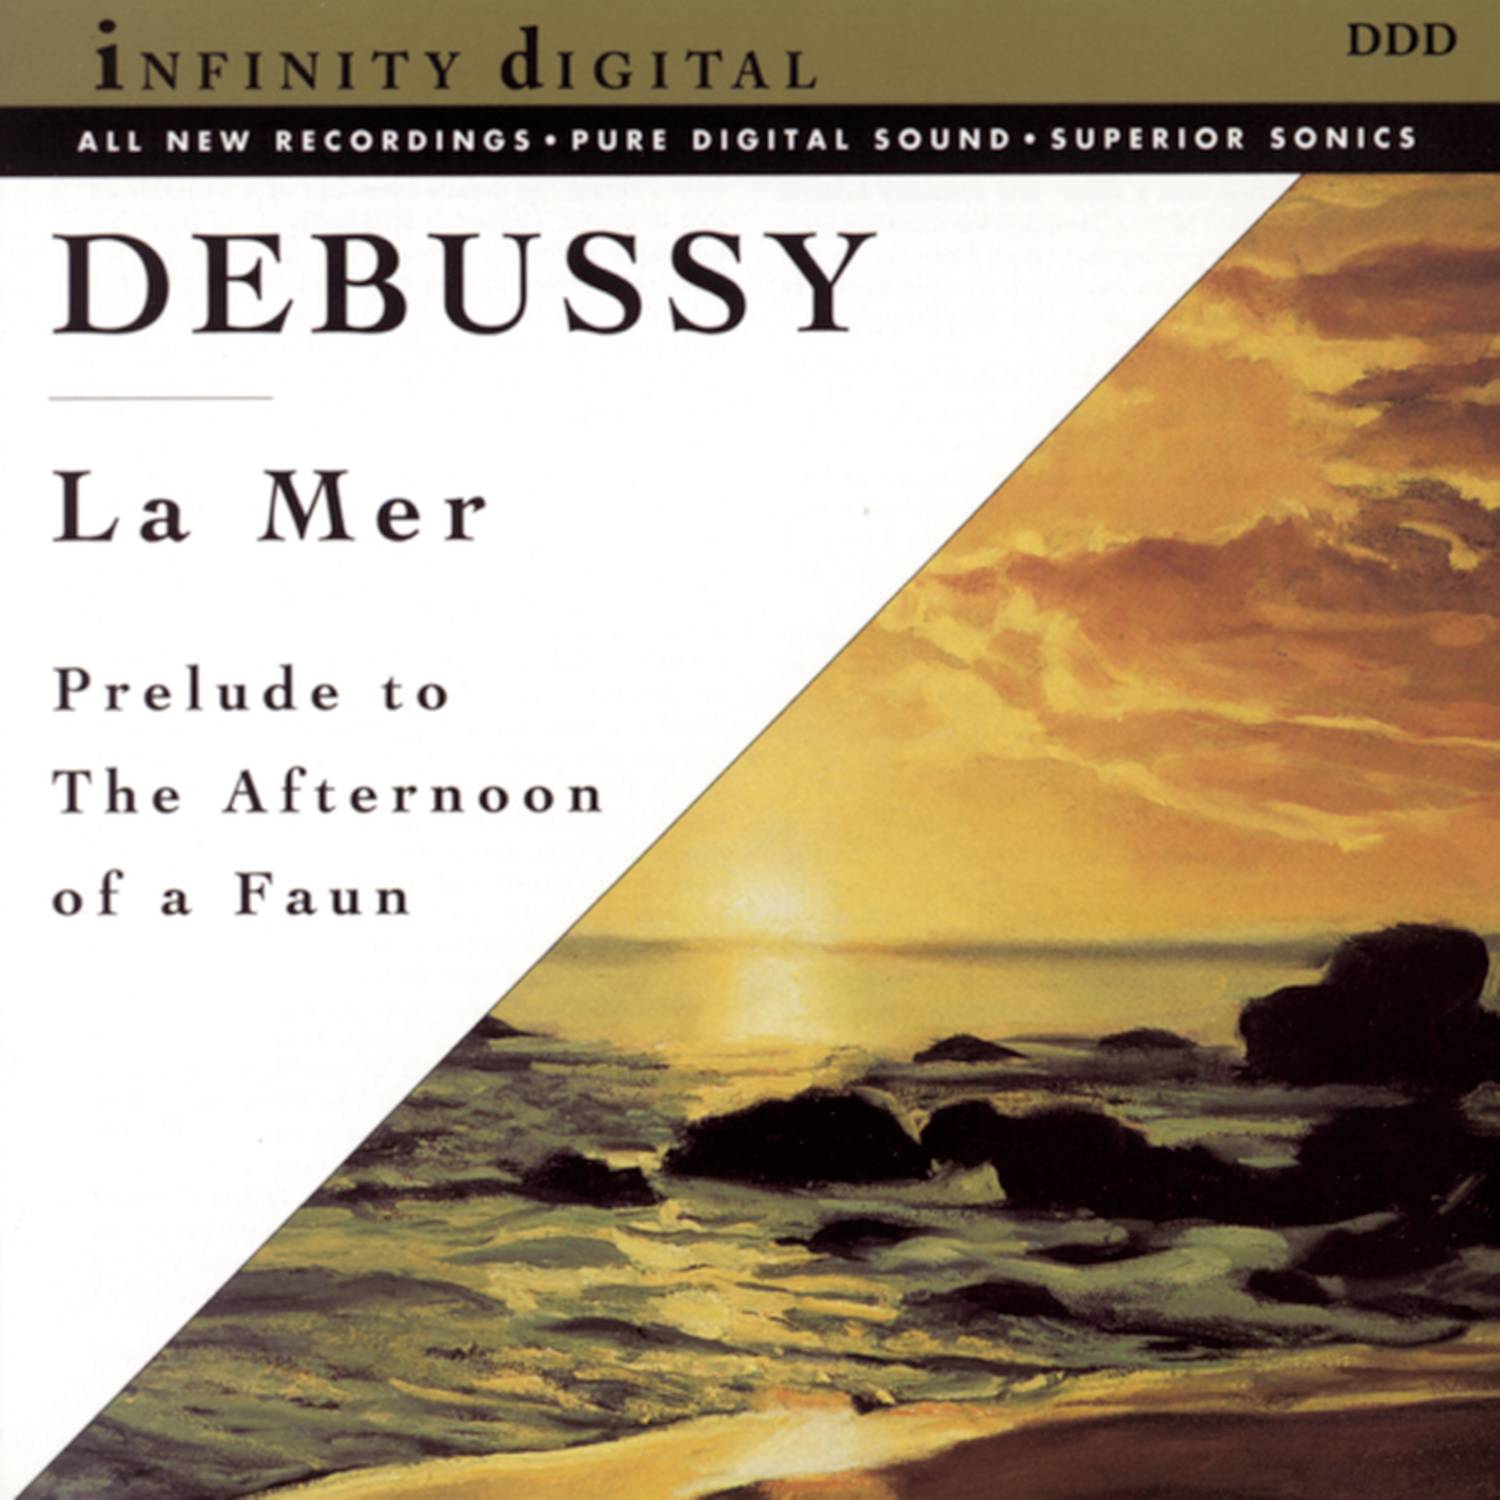 Debussy: La Mer - Danse sacrée et danse profane